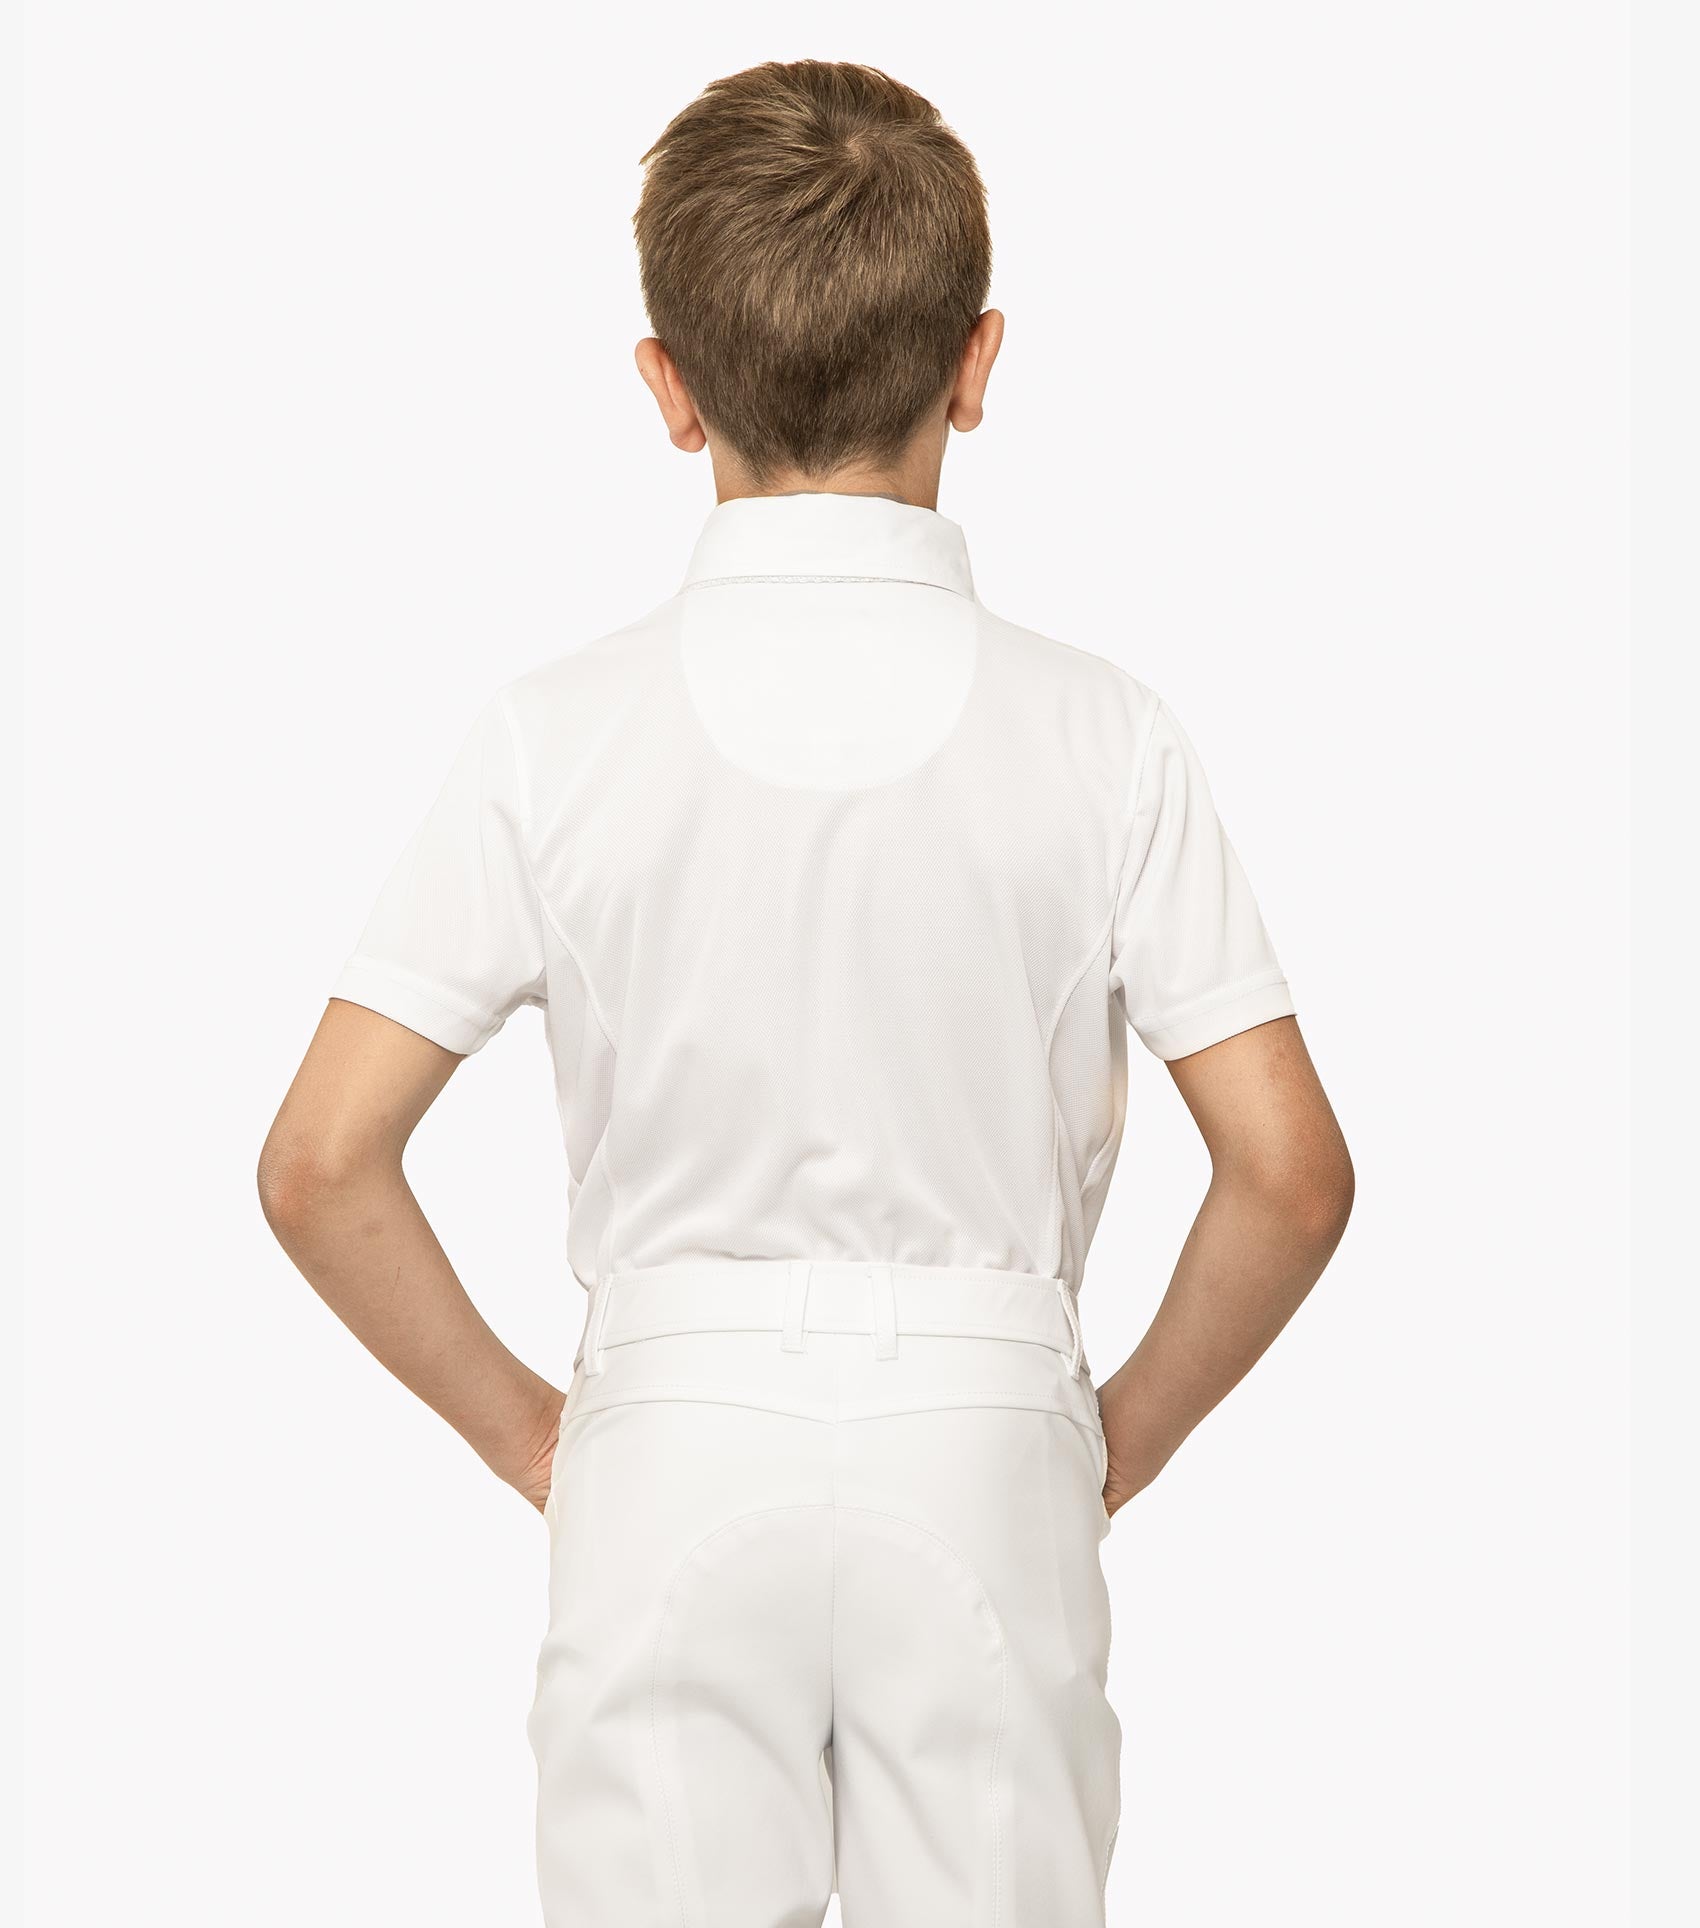 Mini Antonio Boy's Short Sleeve Tie Shirt - White